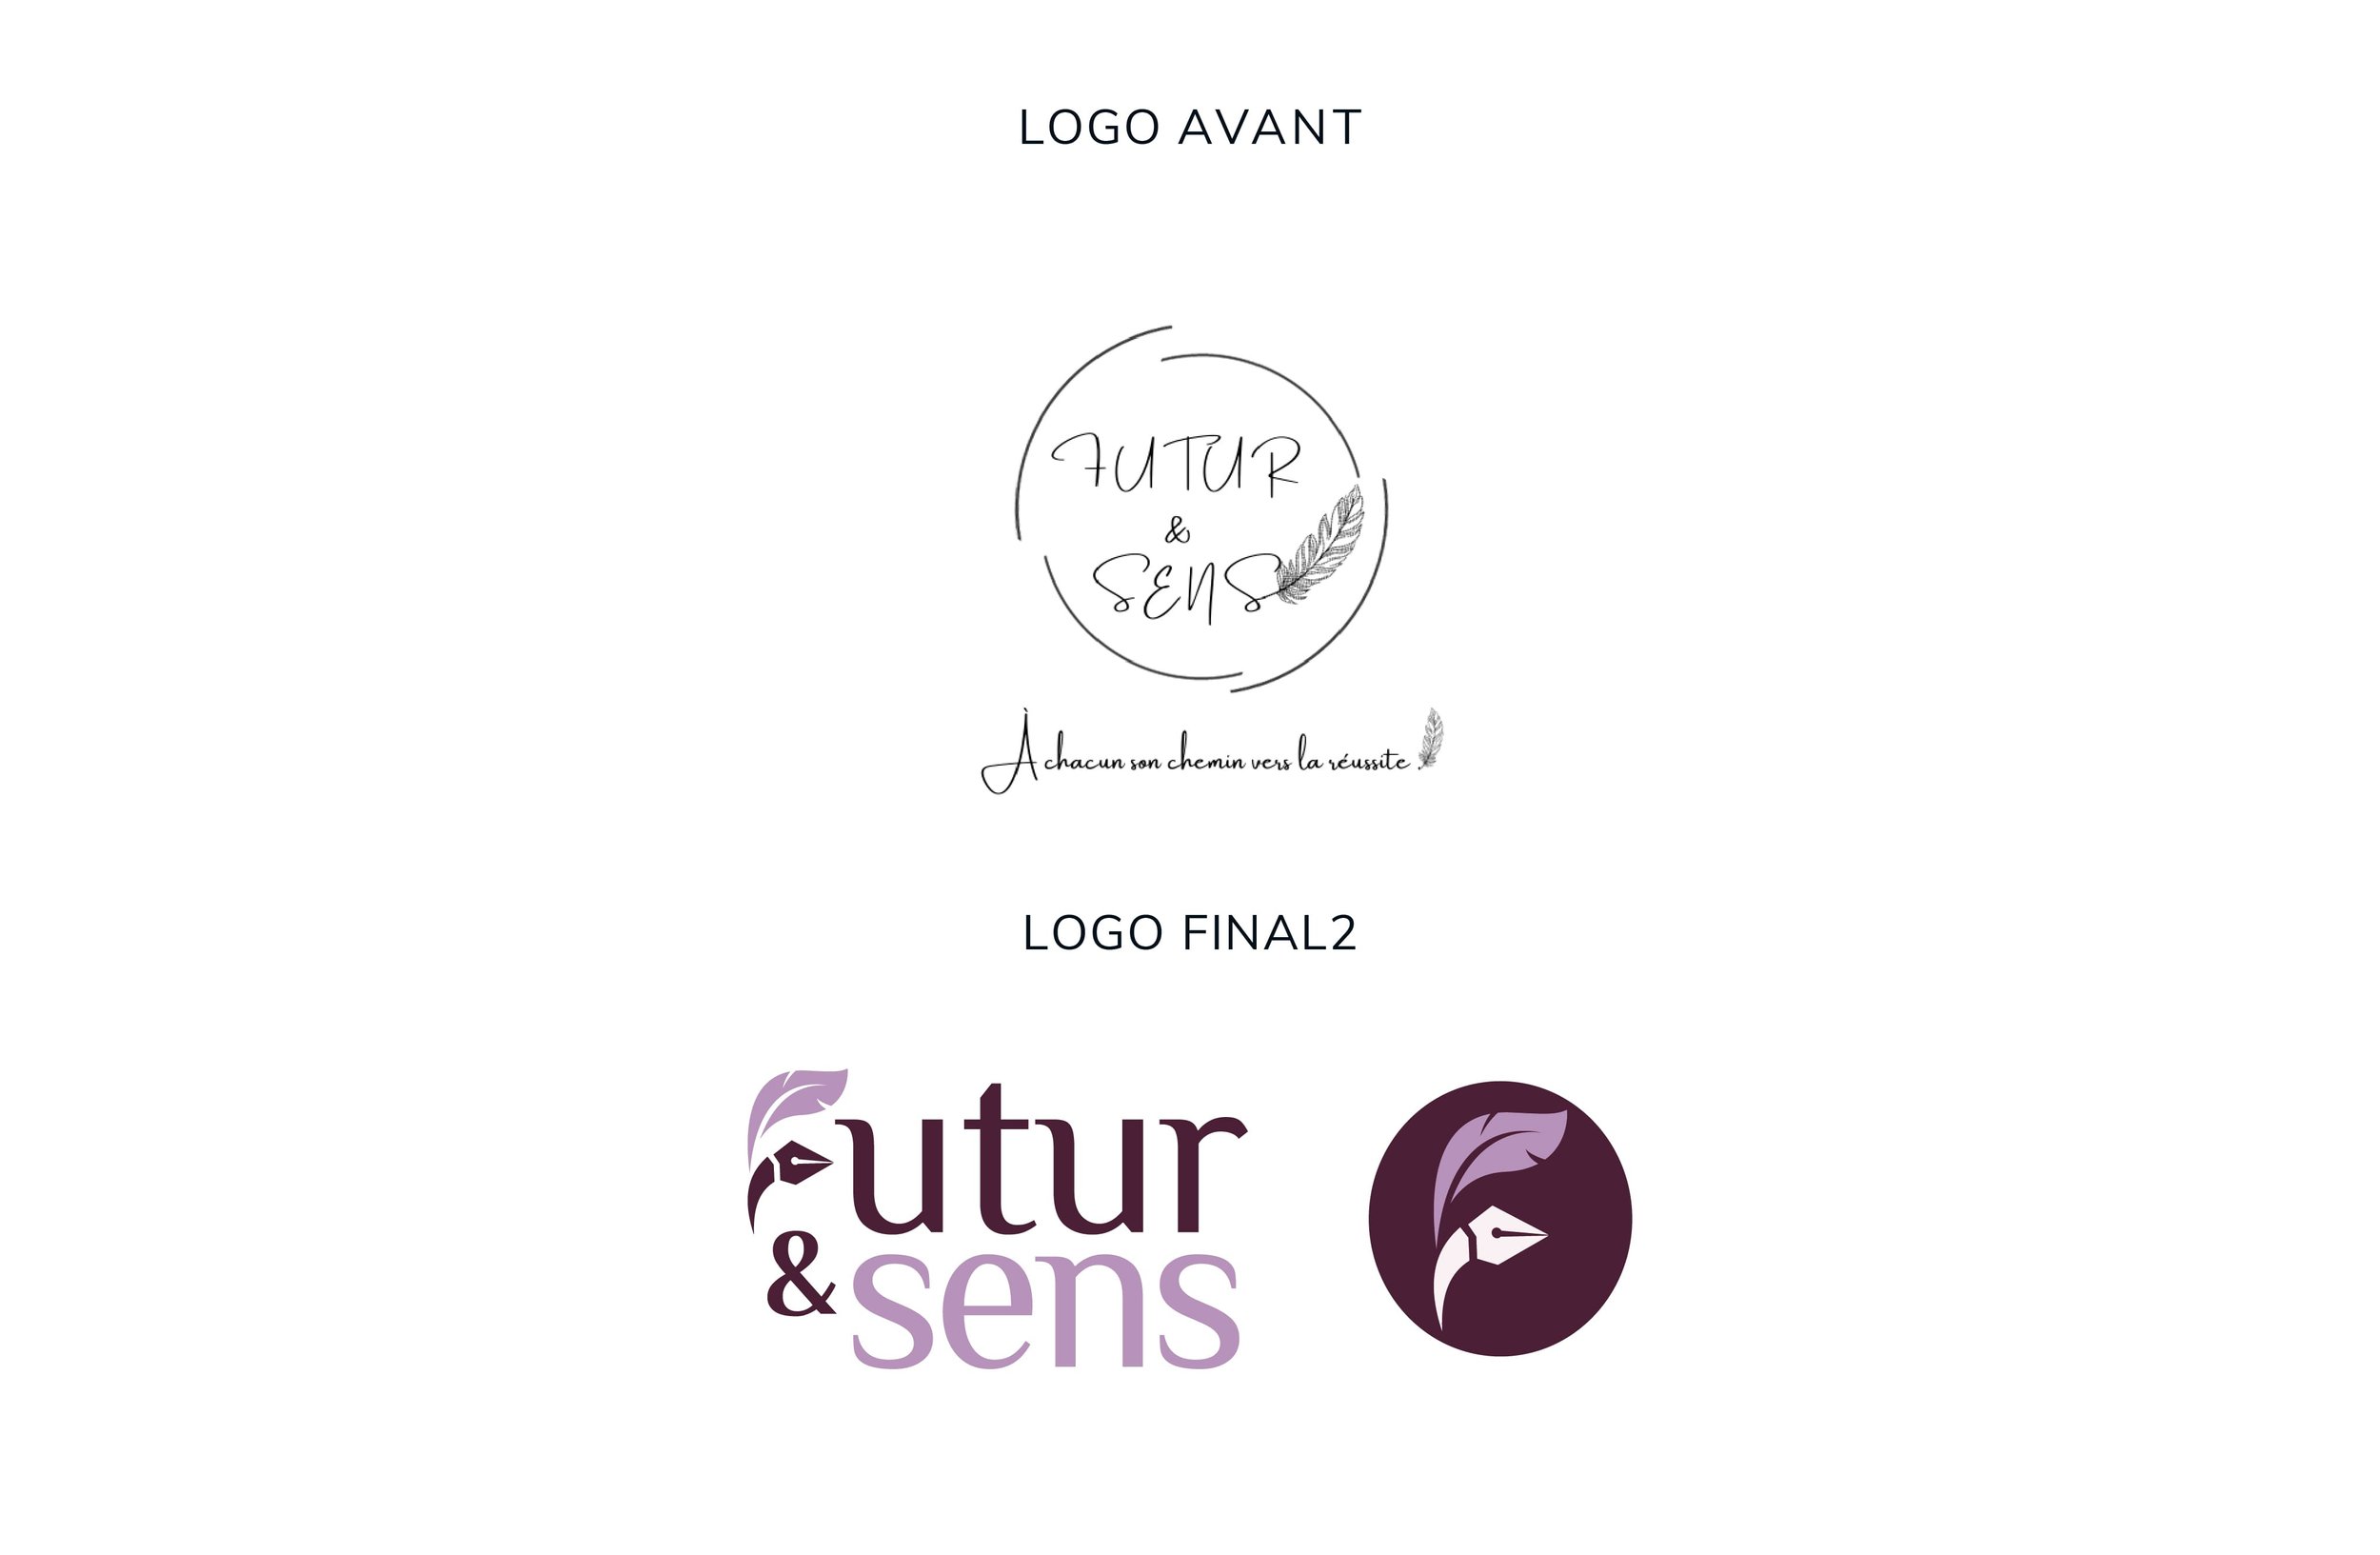 futur-et-sens_portfolio_15-piste-2_logo-avant-apres.jpg